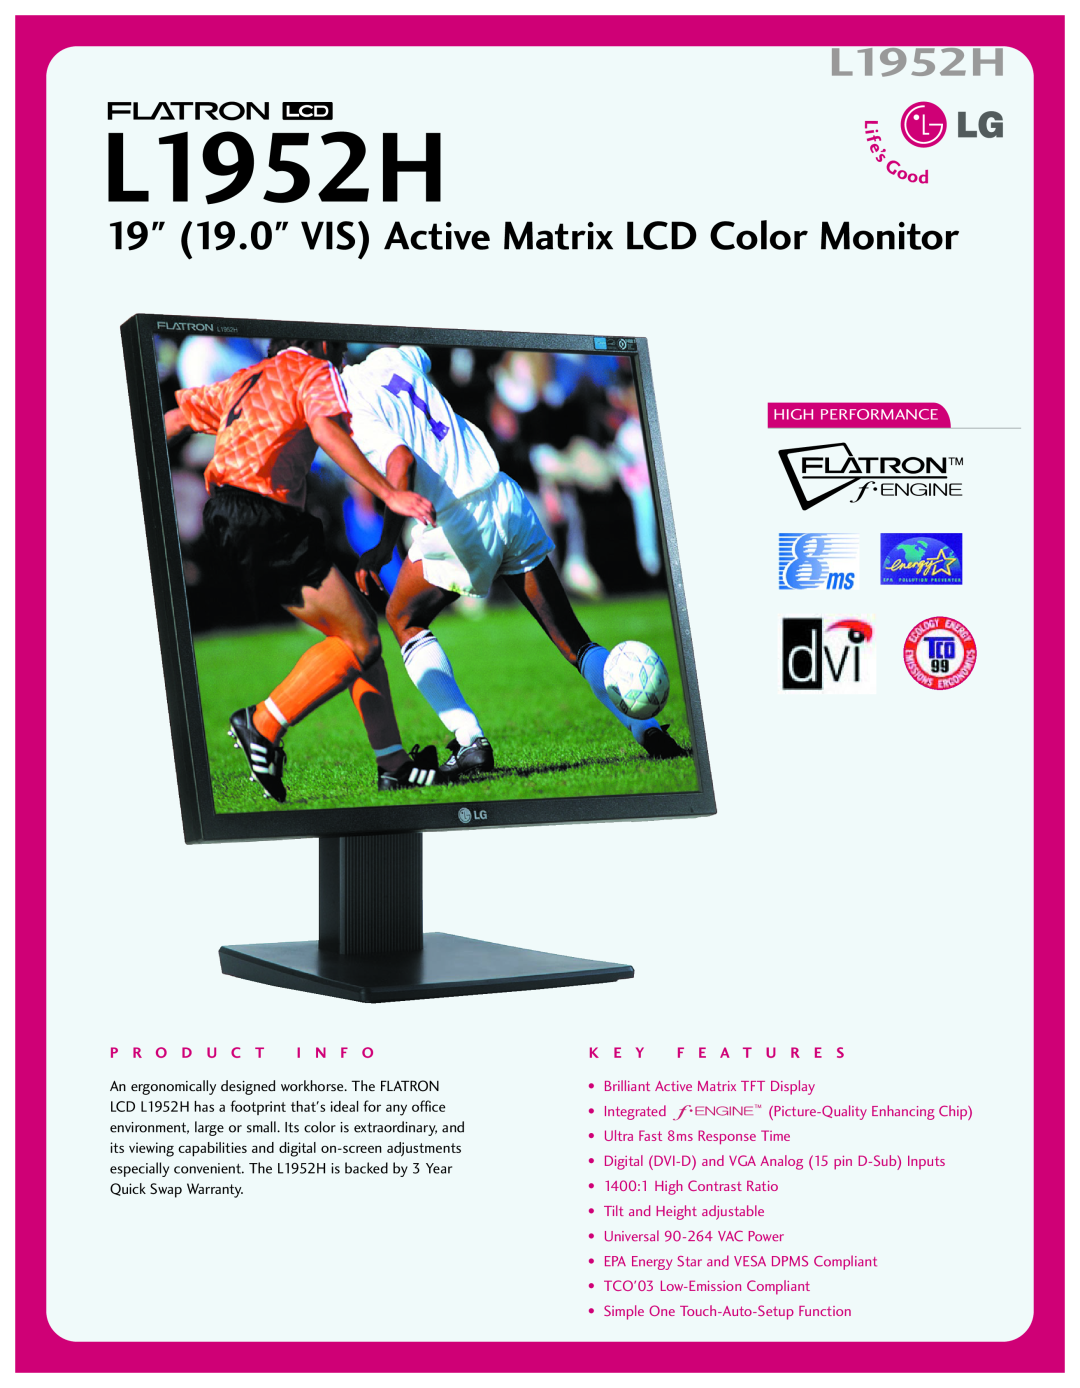 LG Electronics L1952H warranty High Performance, 19 19.0 VIS Active Matrix LCD Color Monitor, P R O D U C T I N F O 